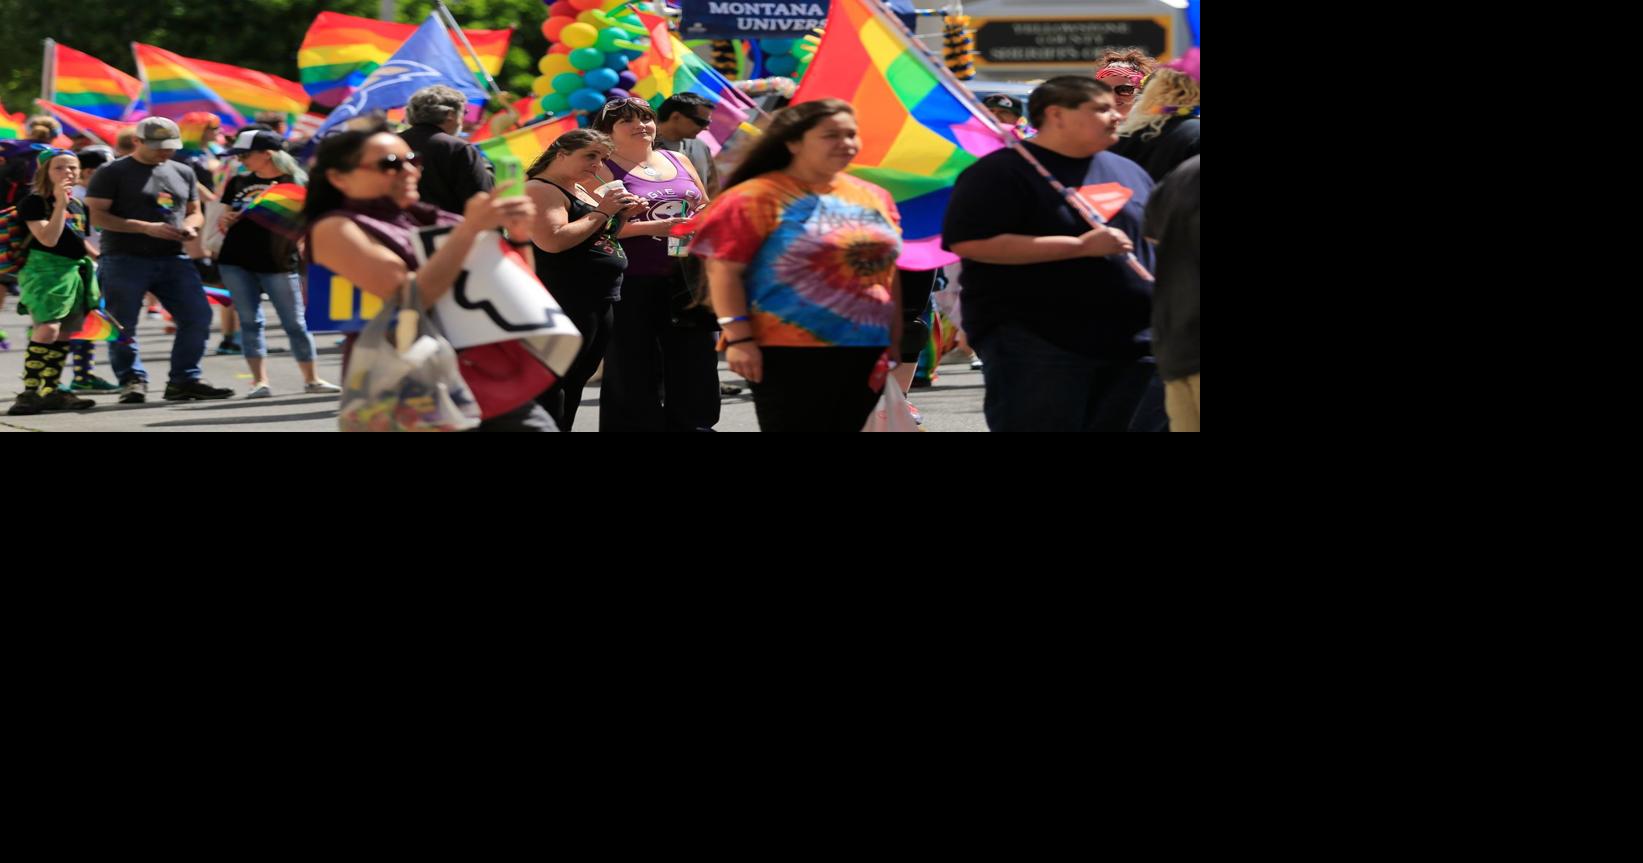 LGBTQ Pride celebration planned in downtown Billings